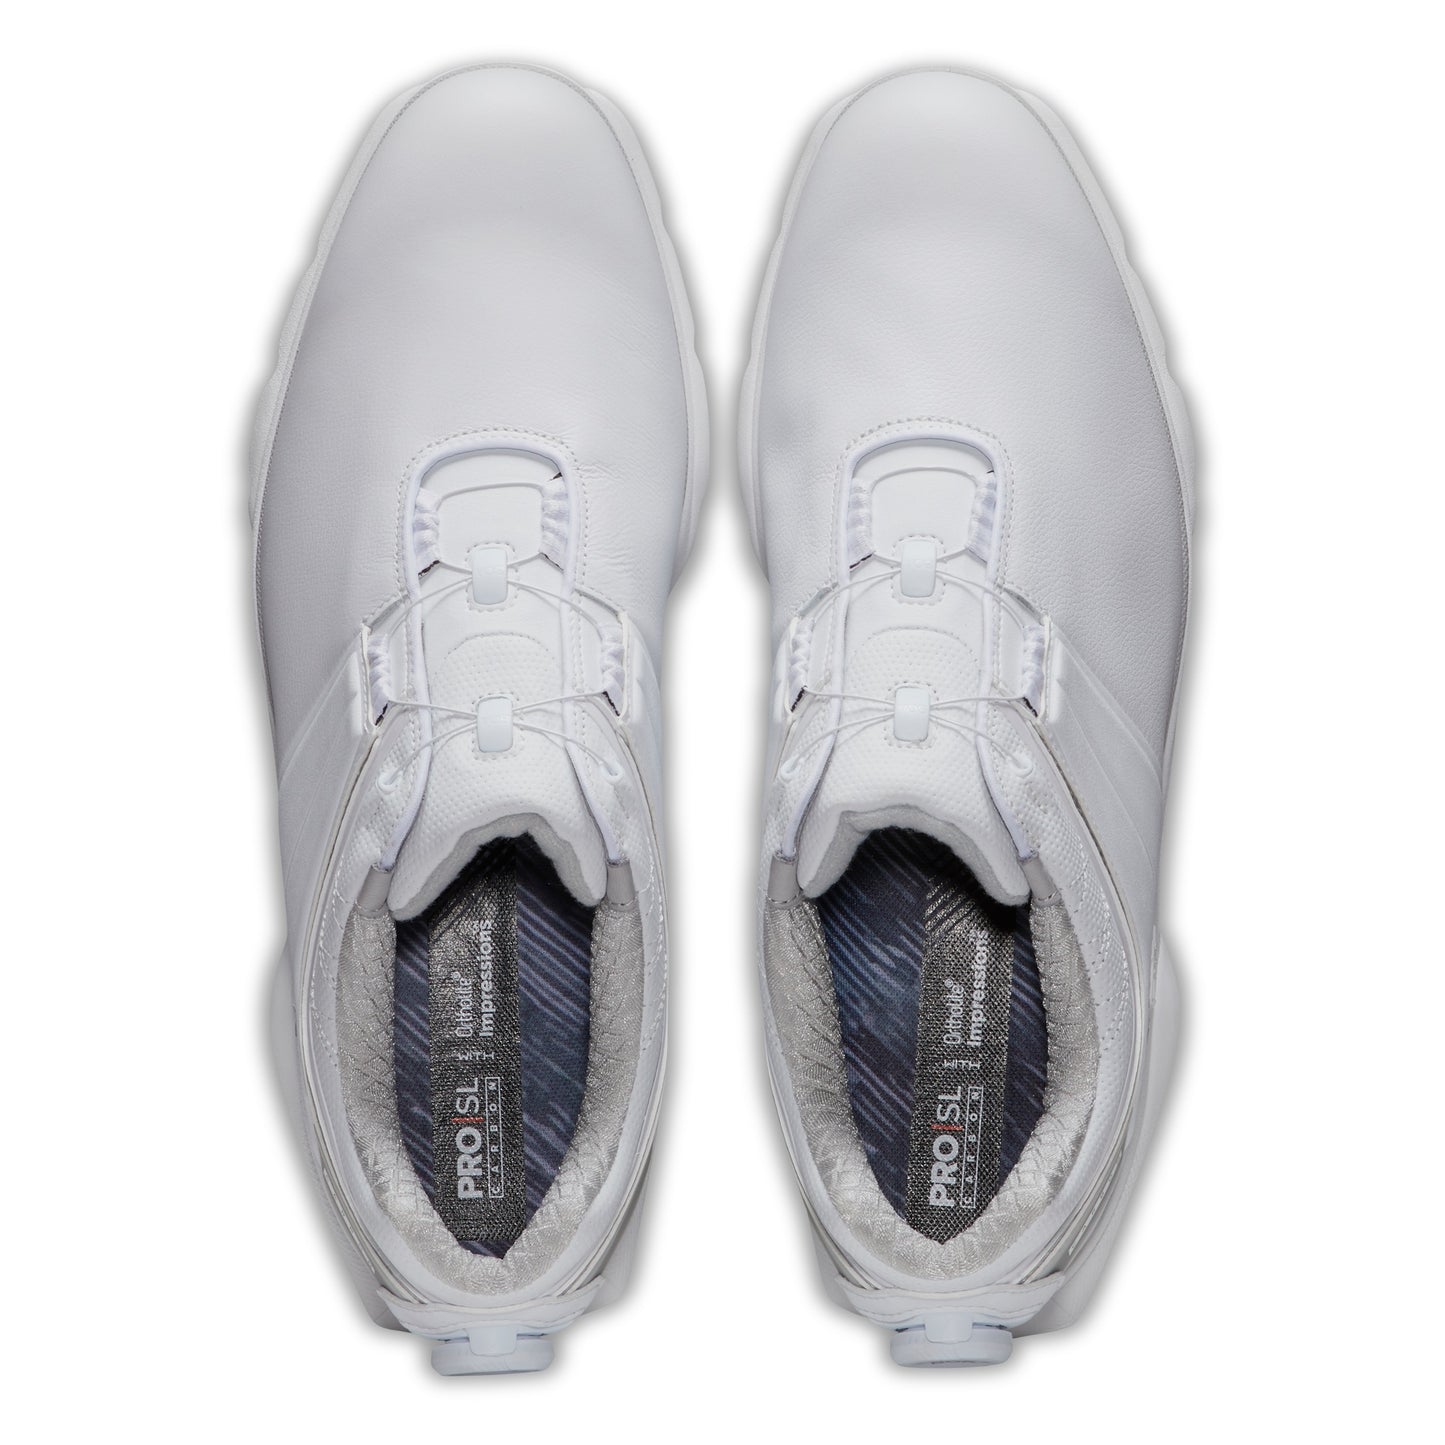 FootJoy Pro|SL Carbon BOA Golf Shoes 53085 White/Silver (Previous Season Style)